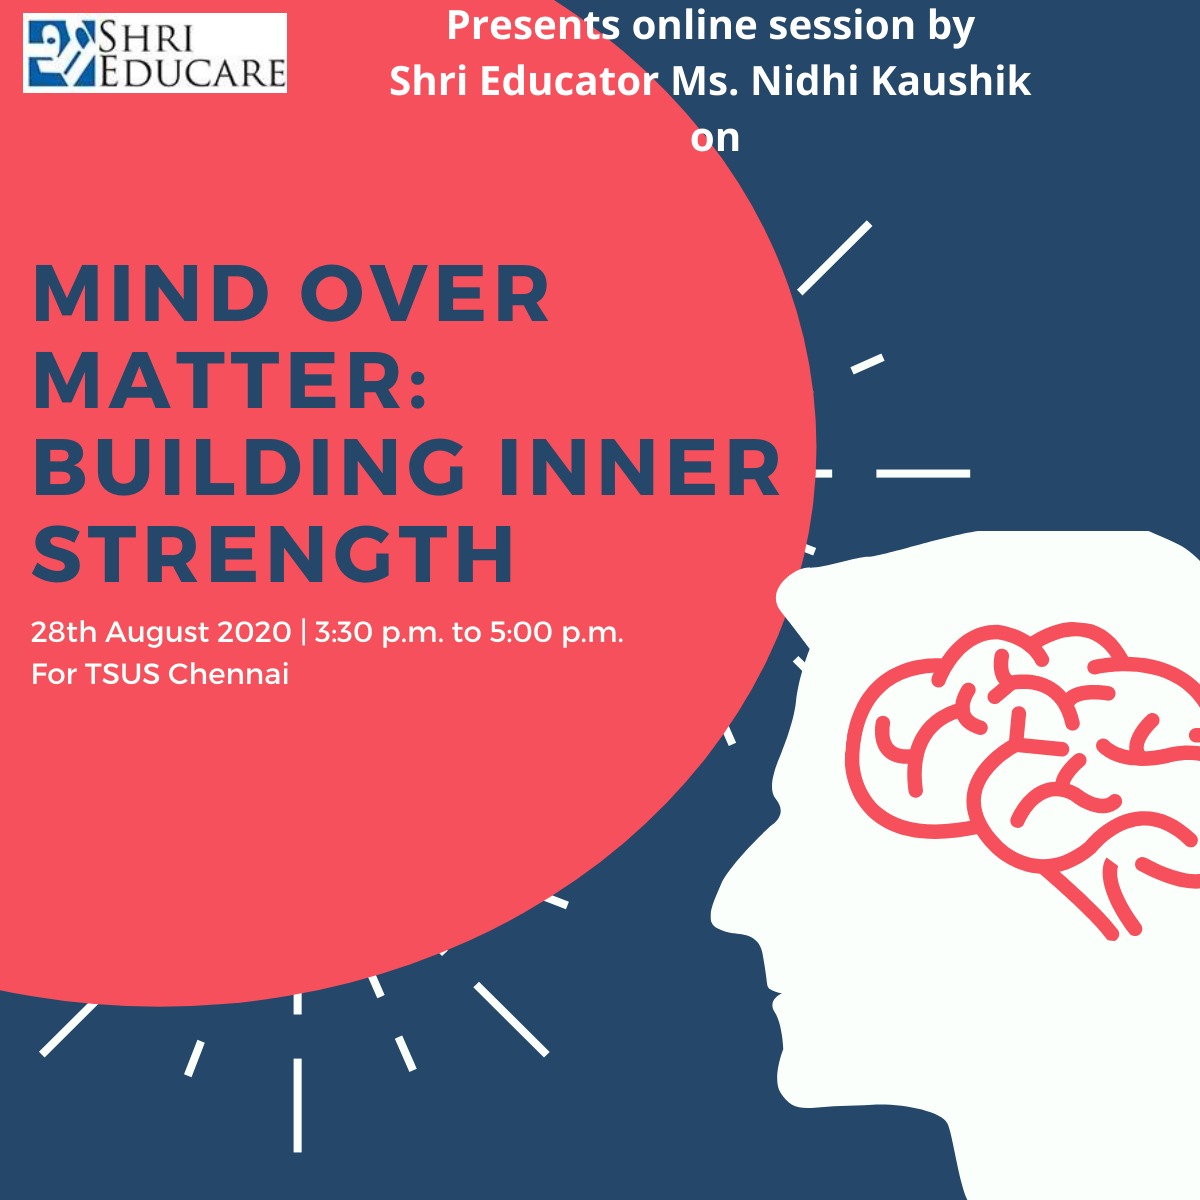 Online session on mind over matter: building inner strength